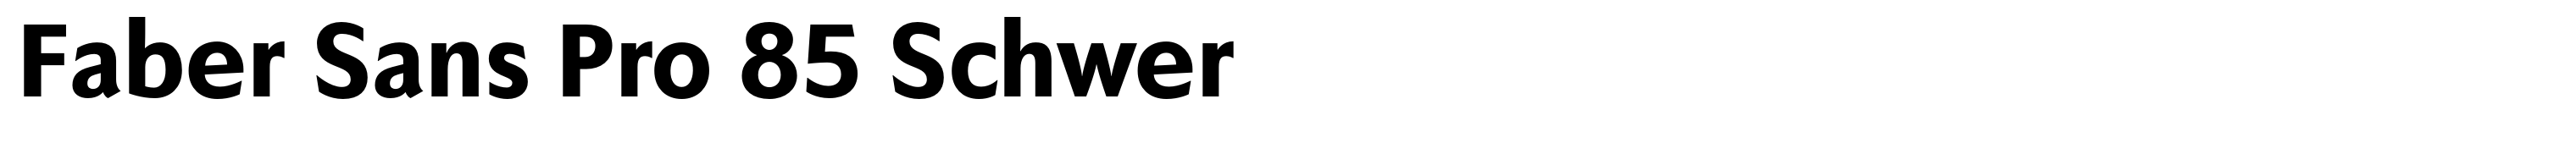 Faber Sans Pro 85 Schwer